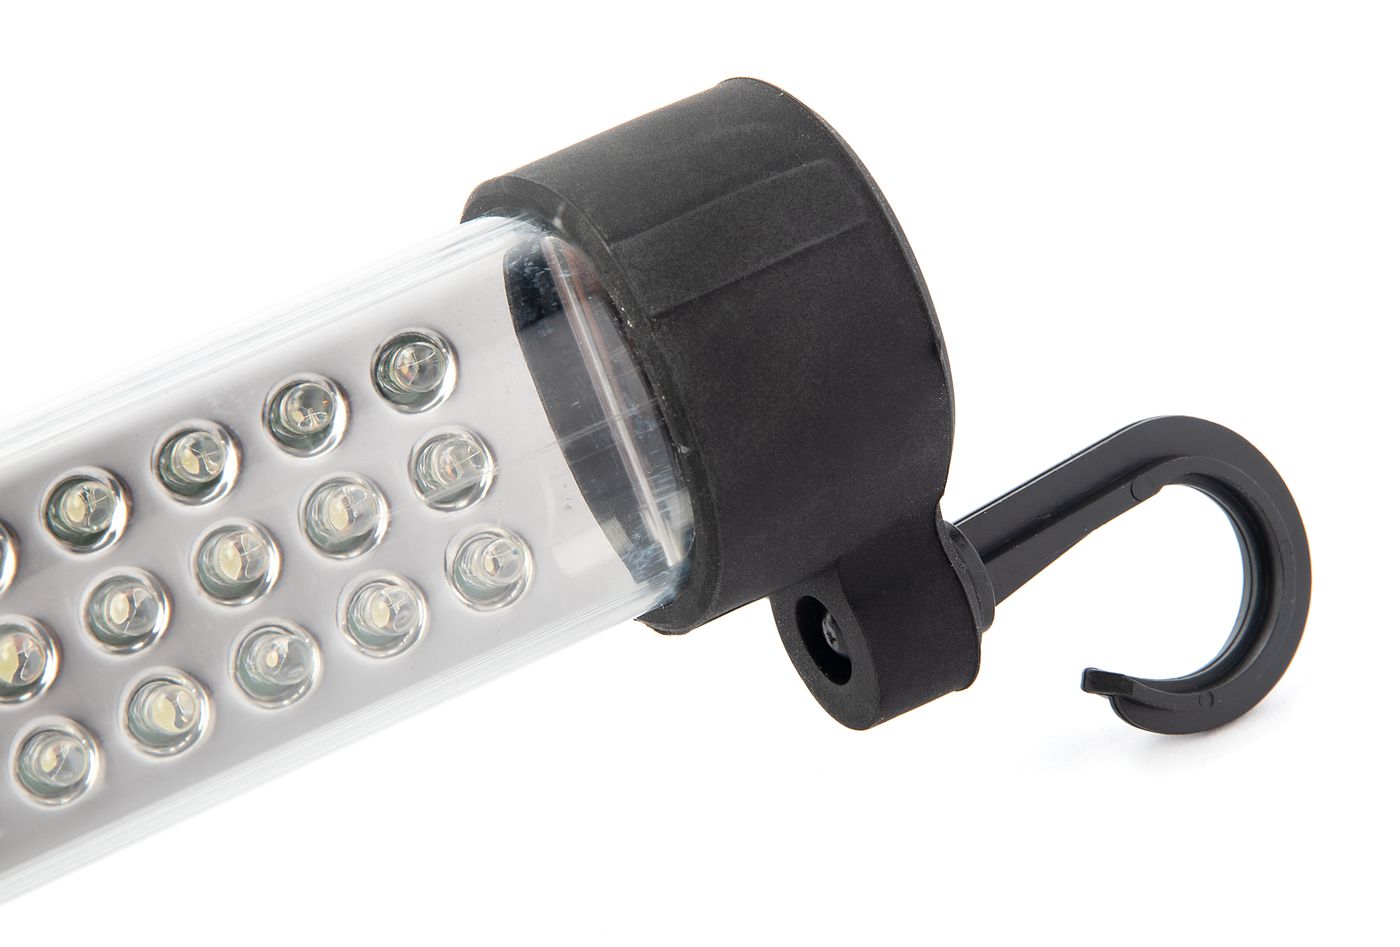 Stablampe
Inspection lamp
Baladeuse antichoc
Staaflamp
Barra de 